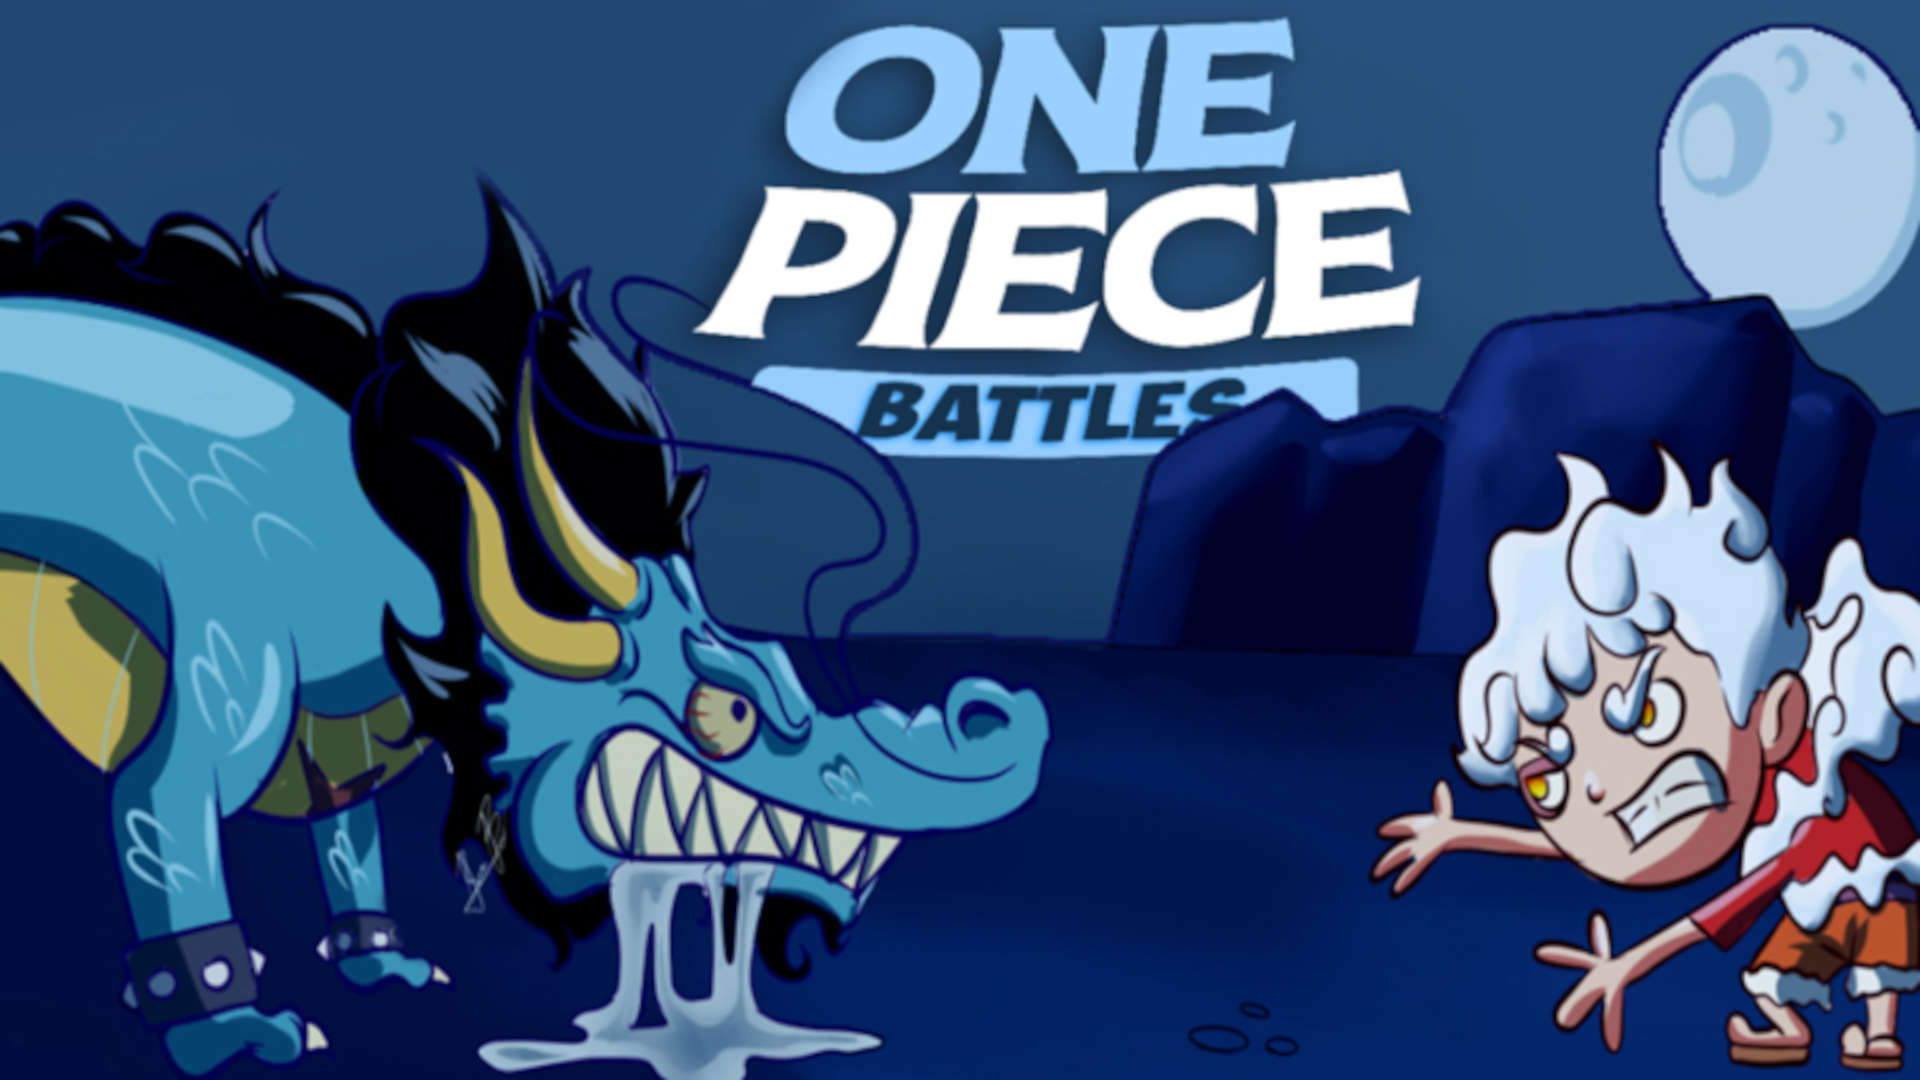 The One Piece Battles logo